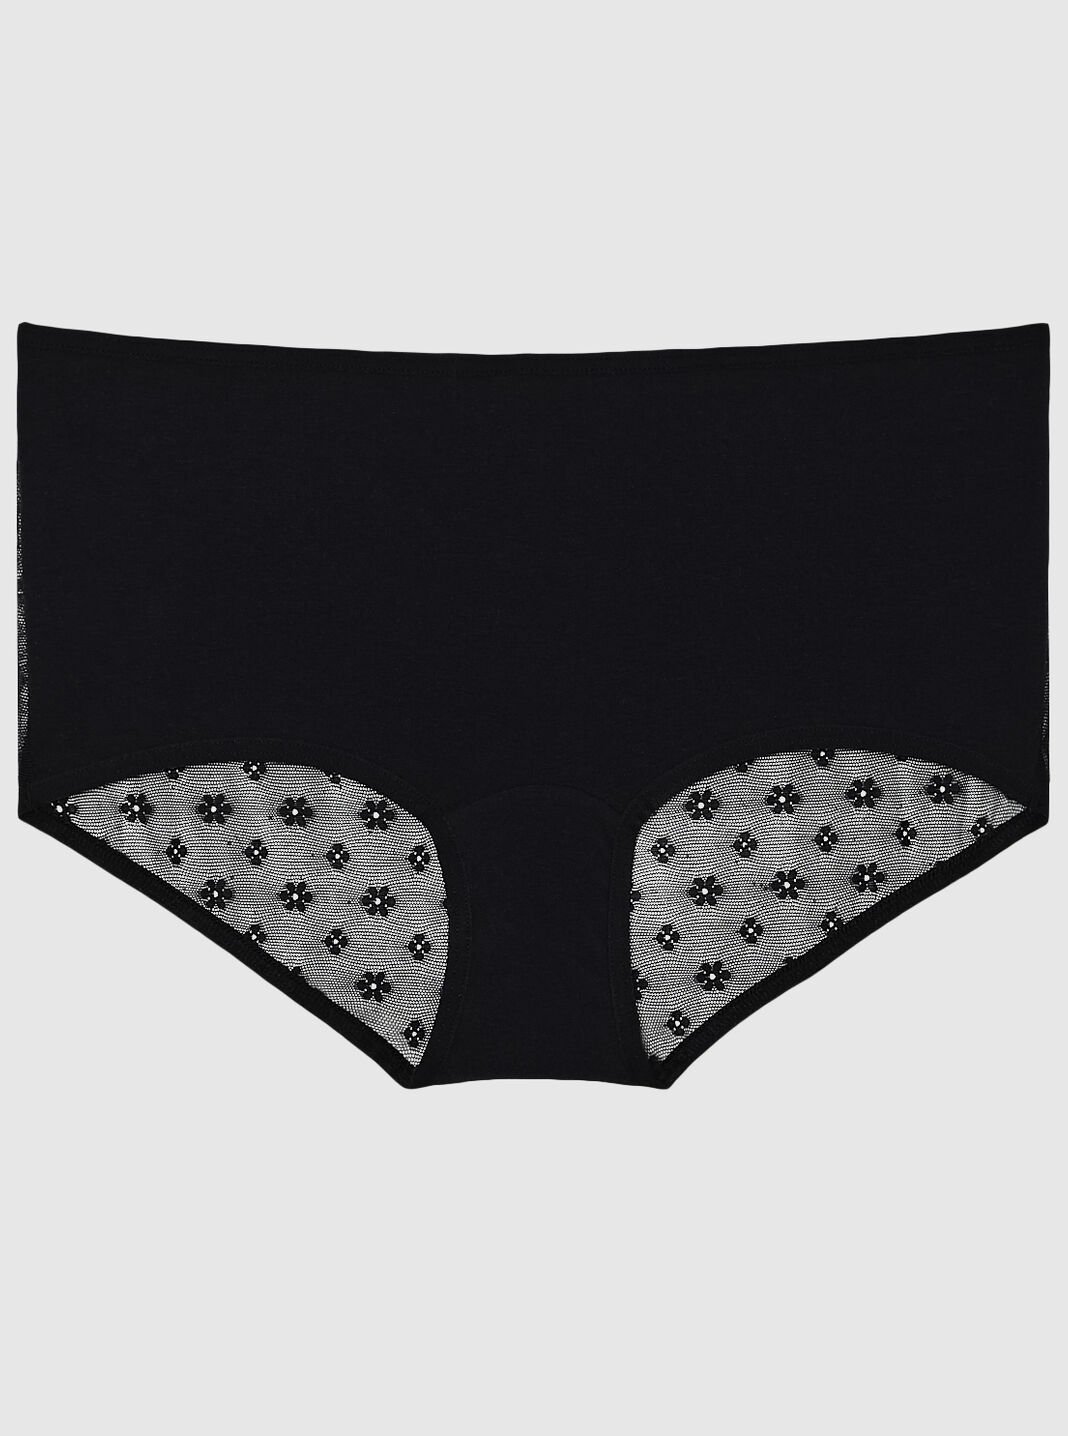 Boyshort Panties & Underwear for Women